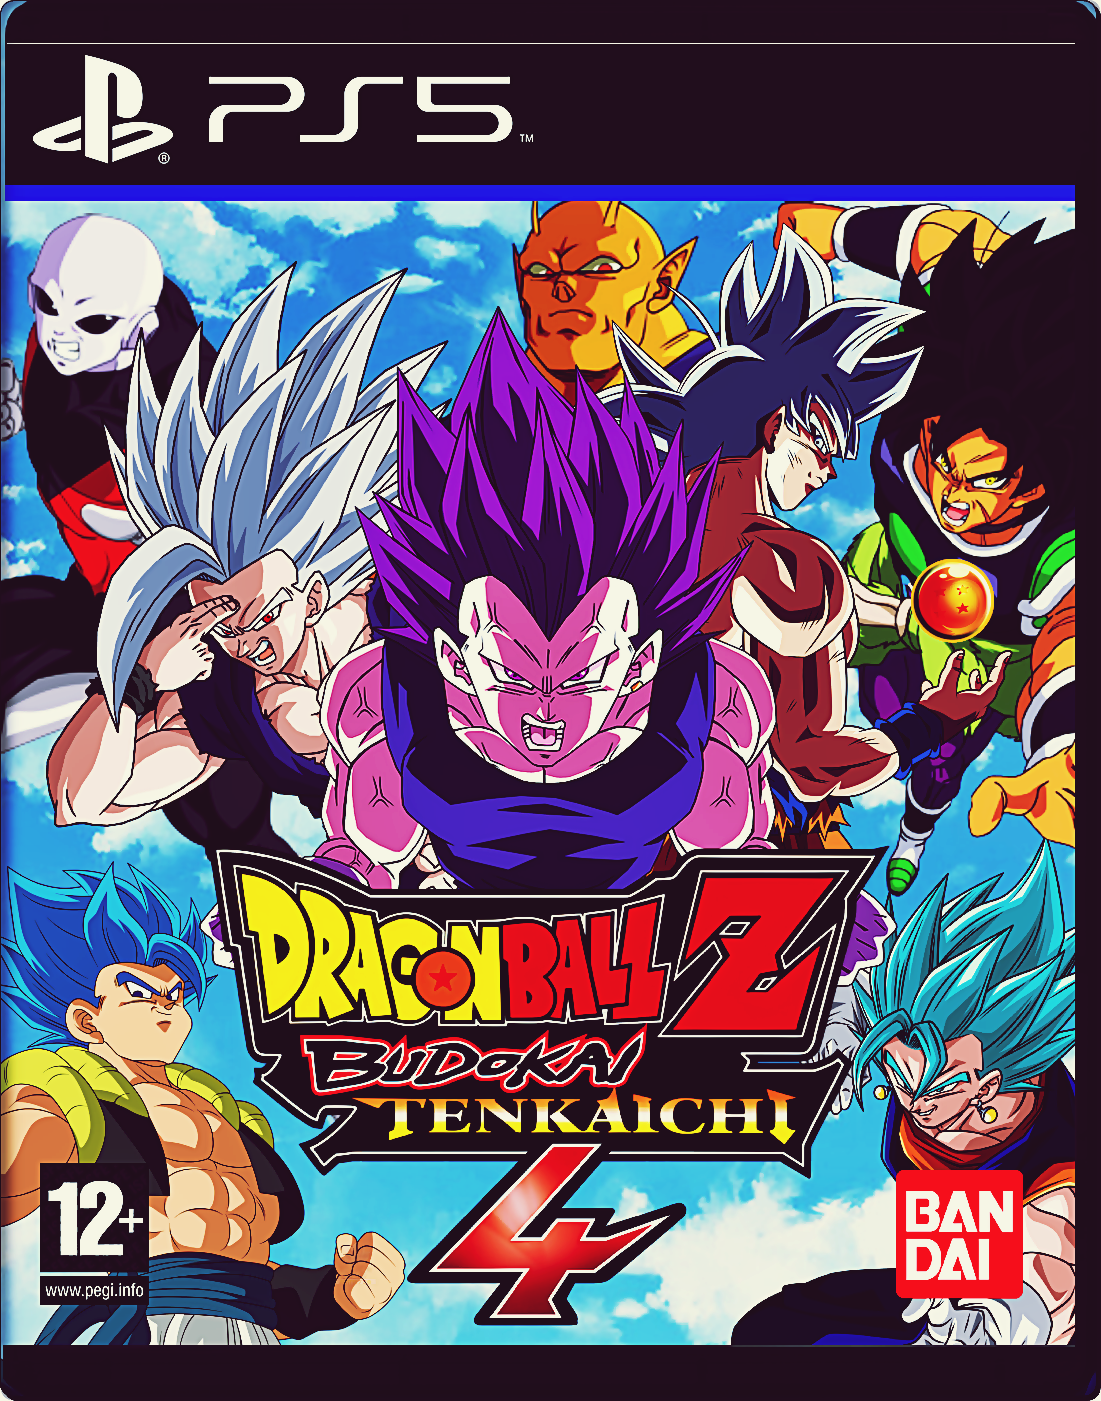 New Dragon Ball Z: Budokai Tenkaichi Game Announced : r/PS5